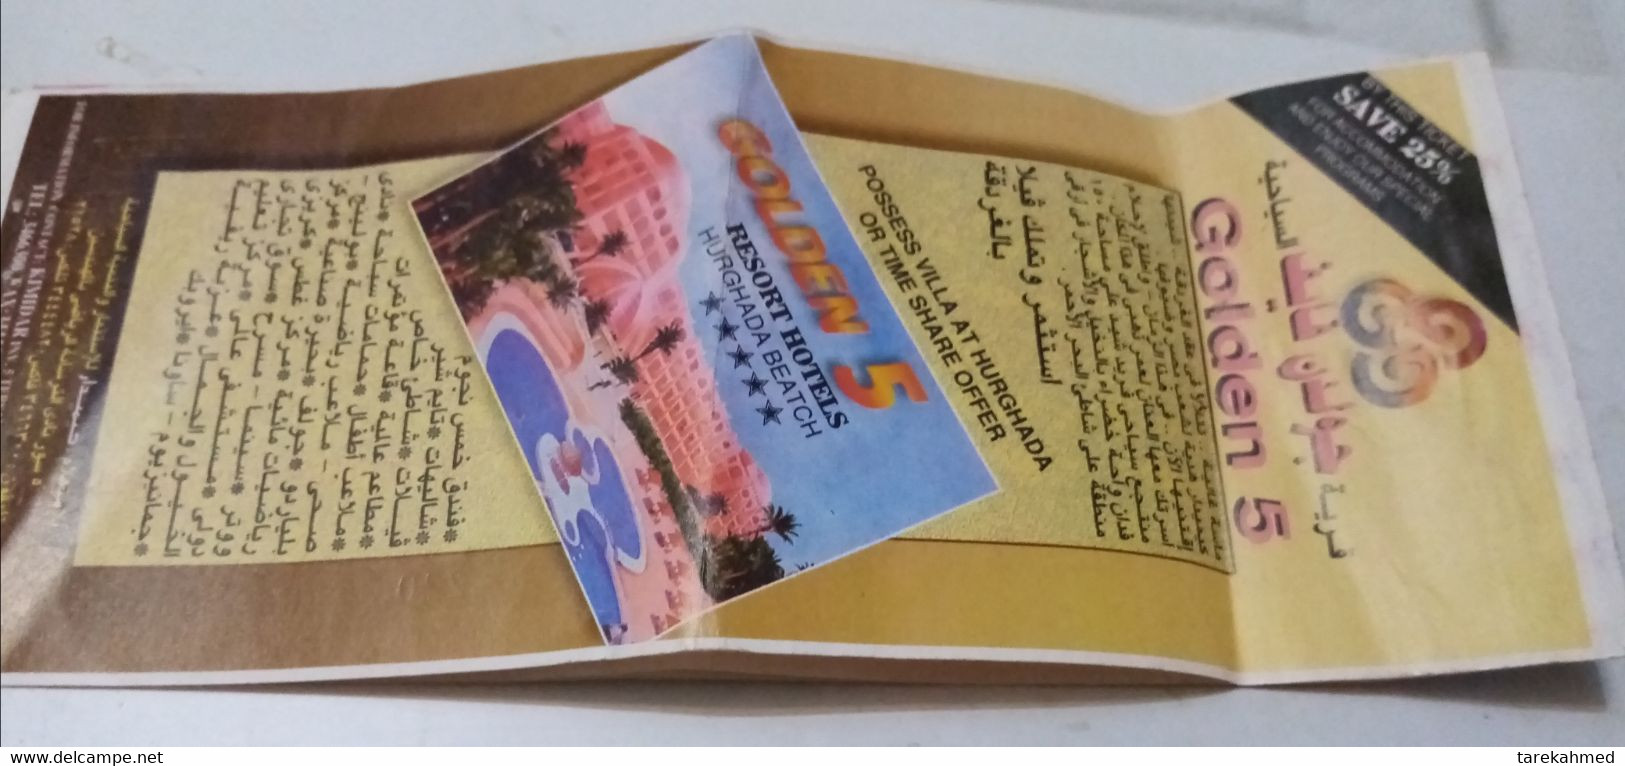 Egypt 1997 , IATA (Lufthansa ) Passenger Ticket - Cairo , Frankfurt , Dolab - Wereld